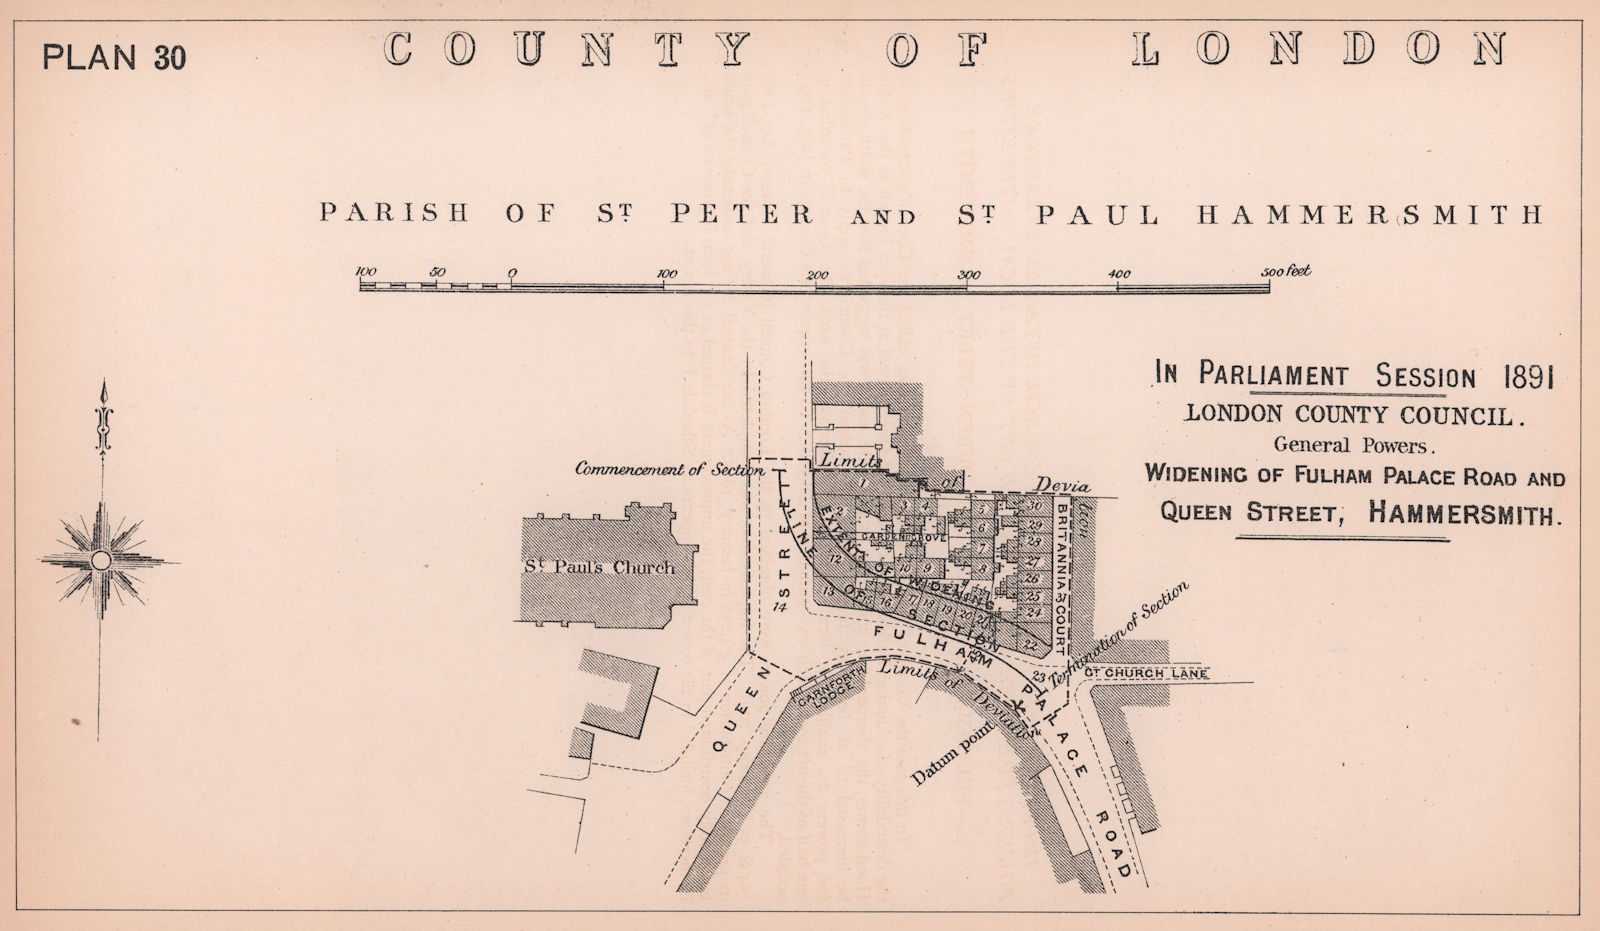 1891 Fulham Palace Road widening. Queen Caroline Street, Hammersmith 1898 map